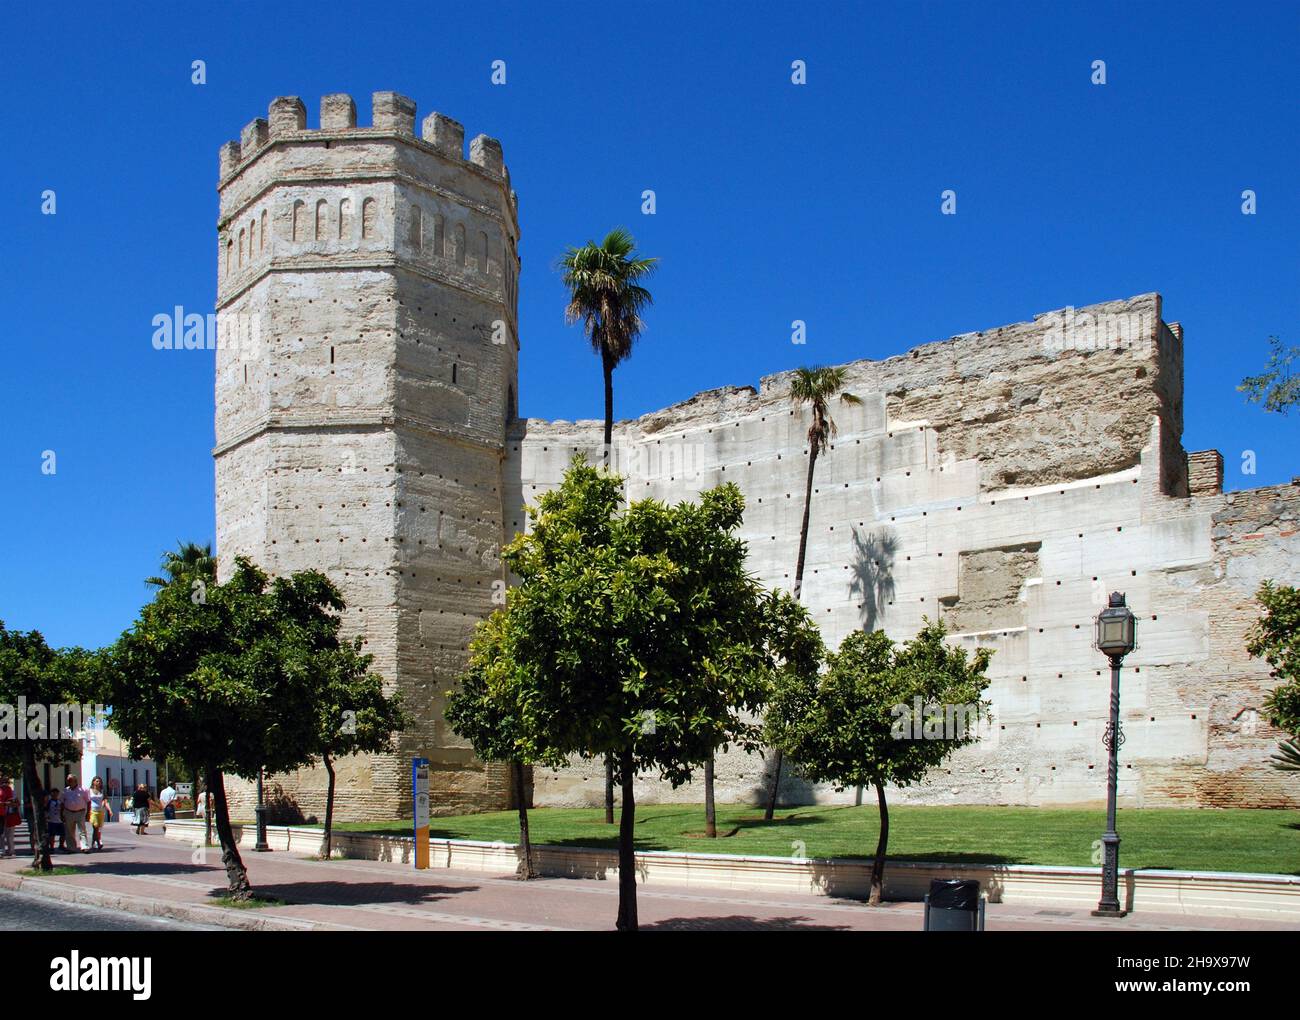 View of the castle wall and turret, Jerez de la Frontera, Spain. Stock Photo